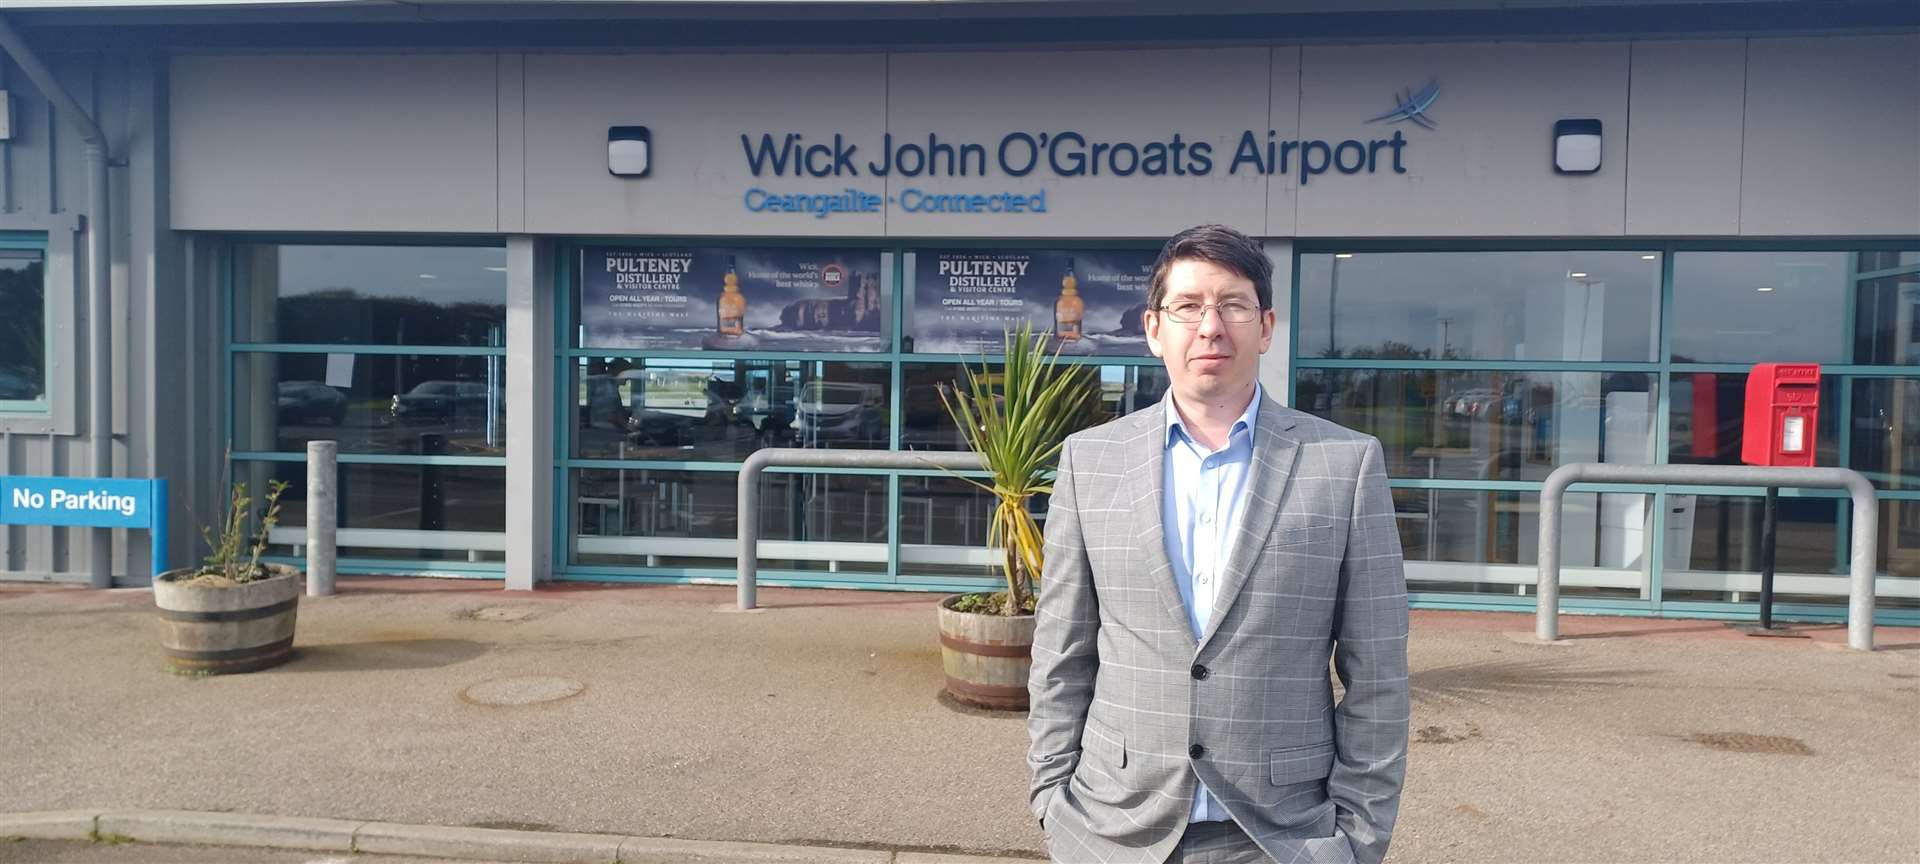 David Swanson at Wick John O'Groats Airport.